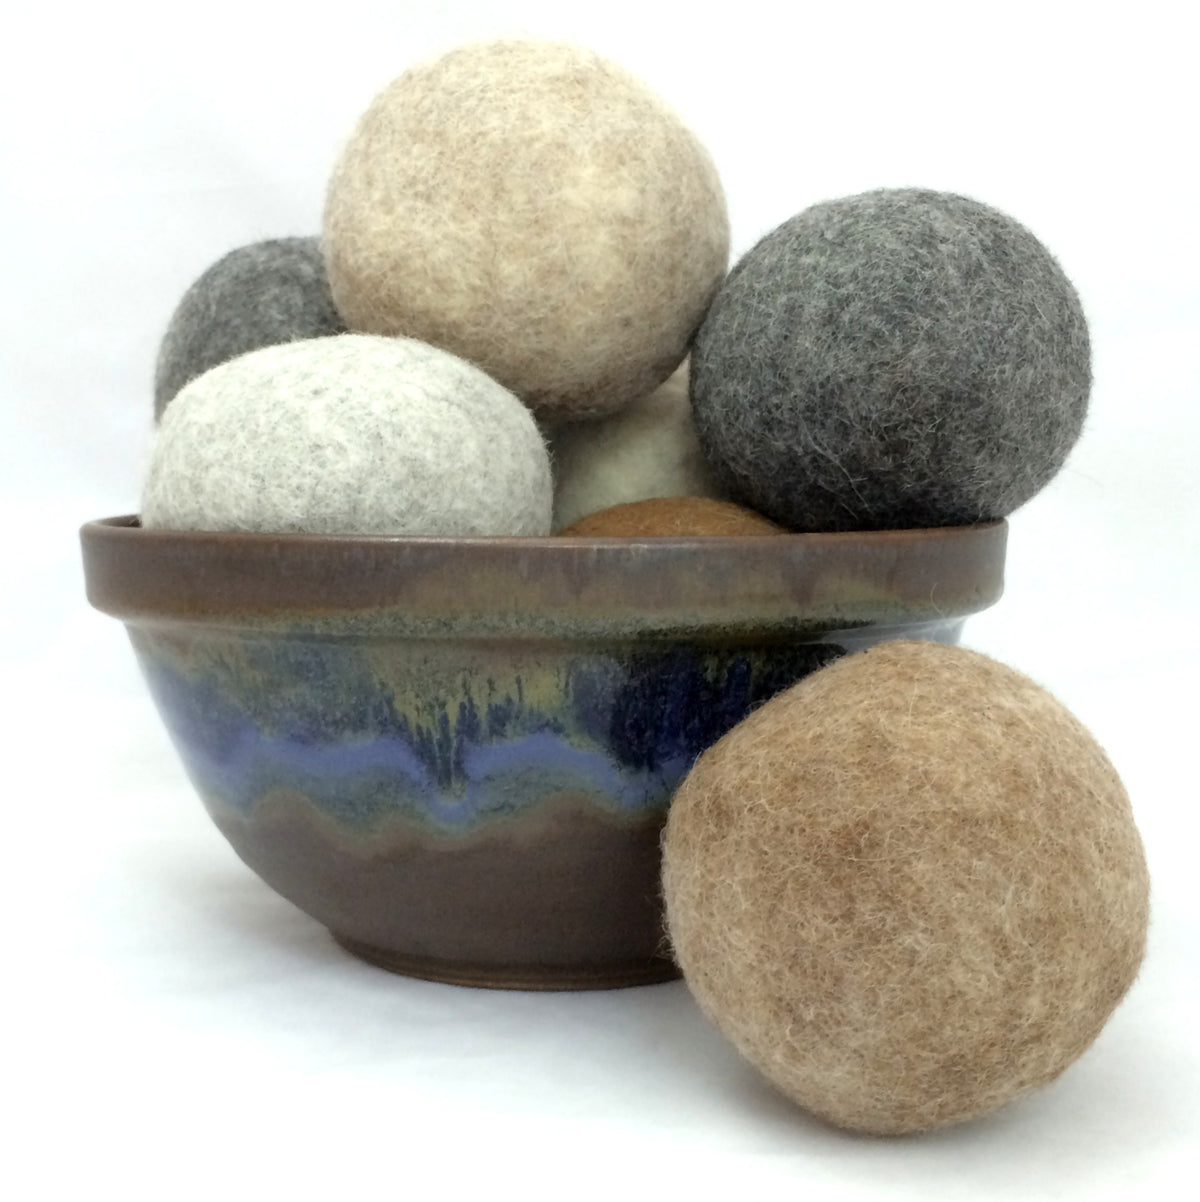 A colorful ceramic bowl full of alpaca wool dryer balls.